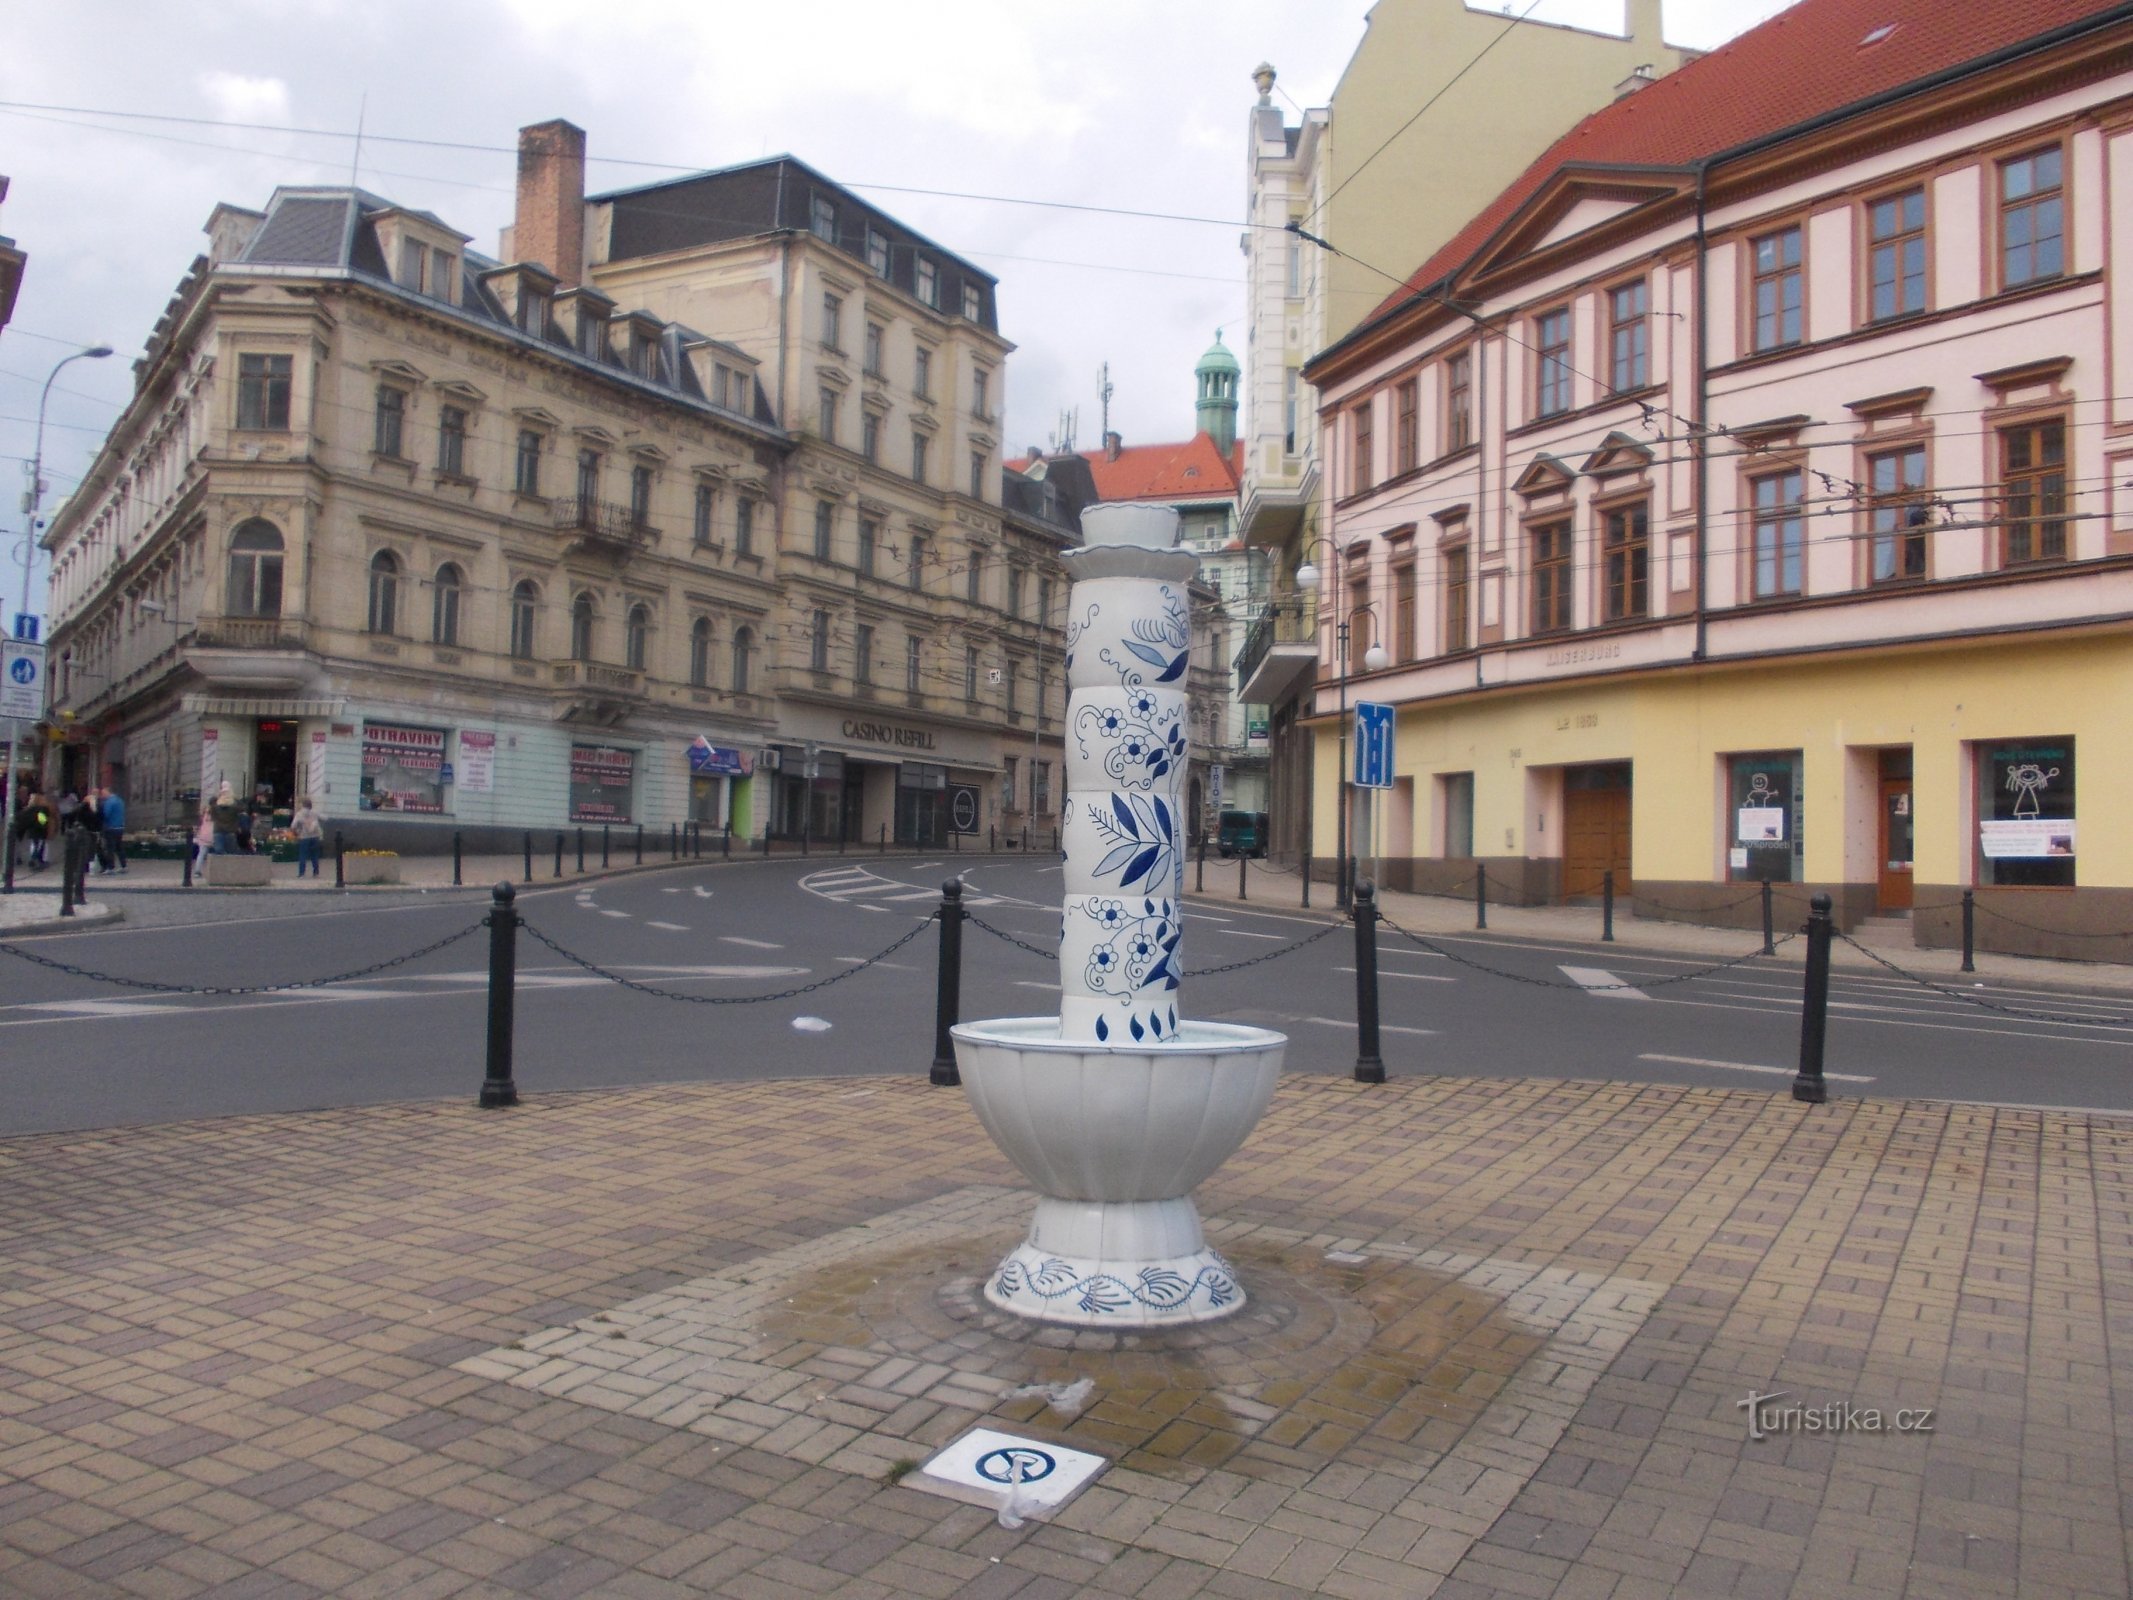 der Brunnen an der Kreuzung der Straßen U Císařských lázní und U divádla